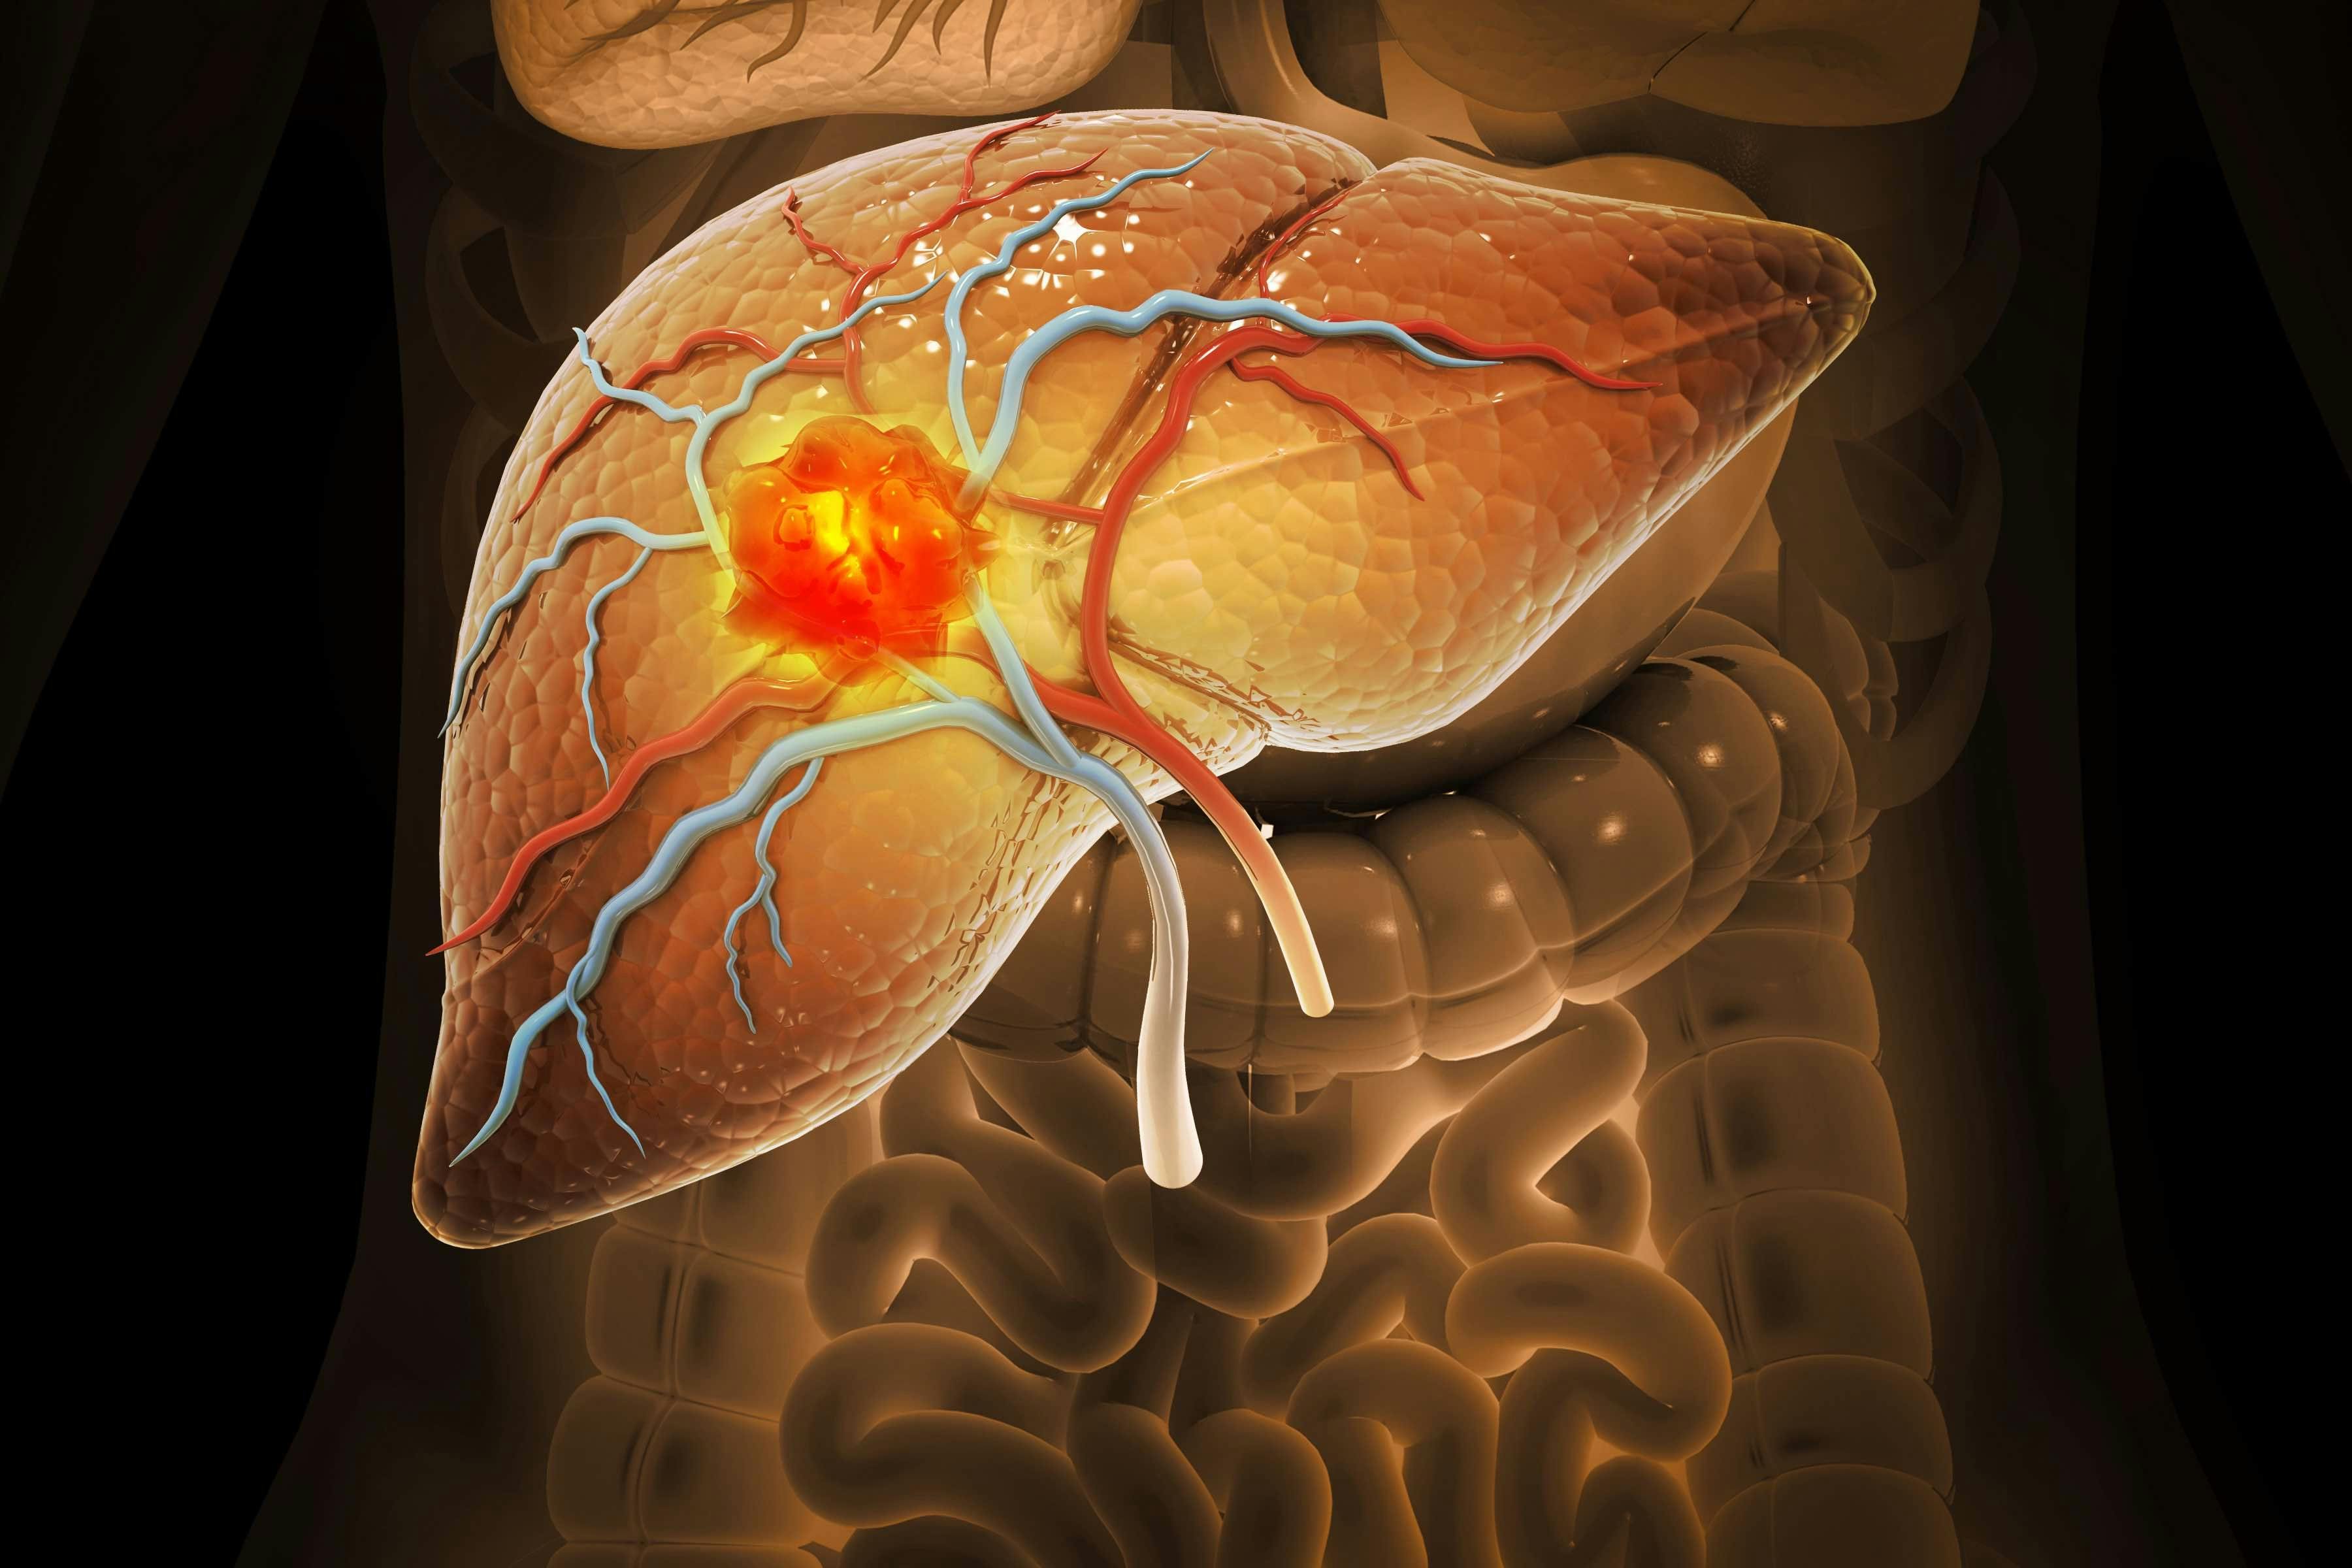 Illustration of hepatocellular carcinoma | Image credit: Crystal light - stock.adobe.com